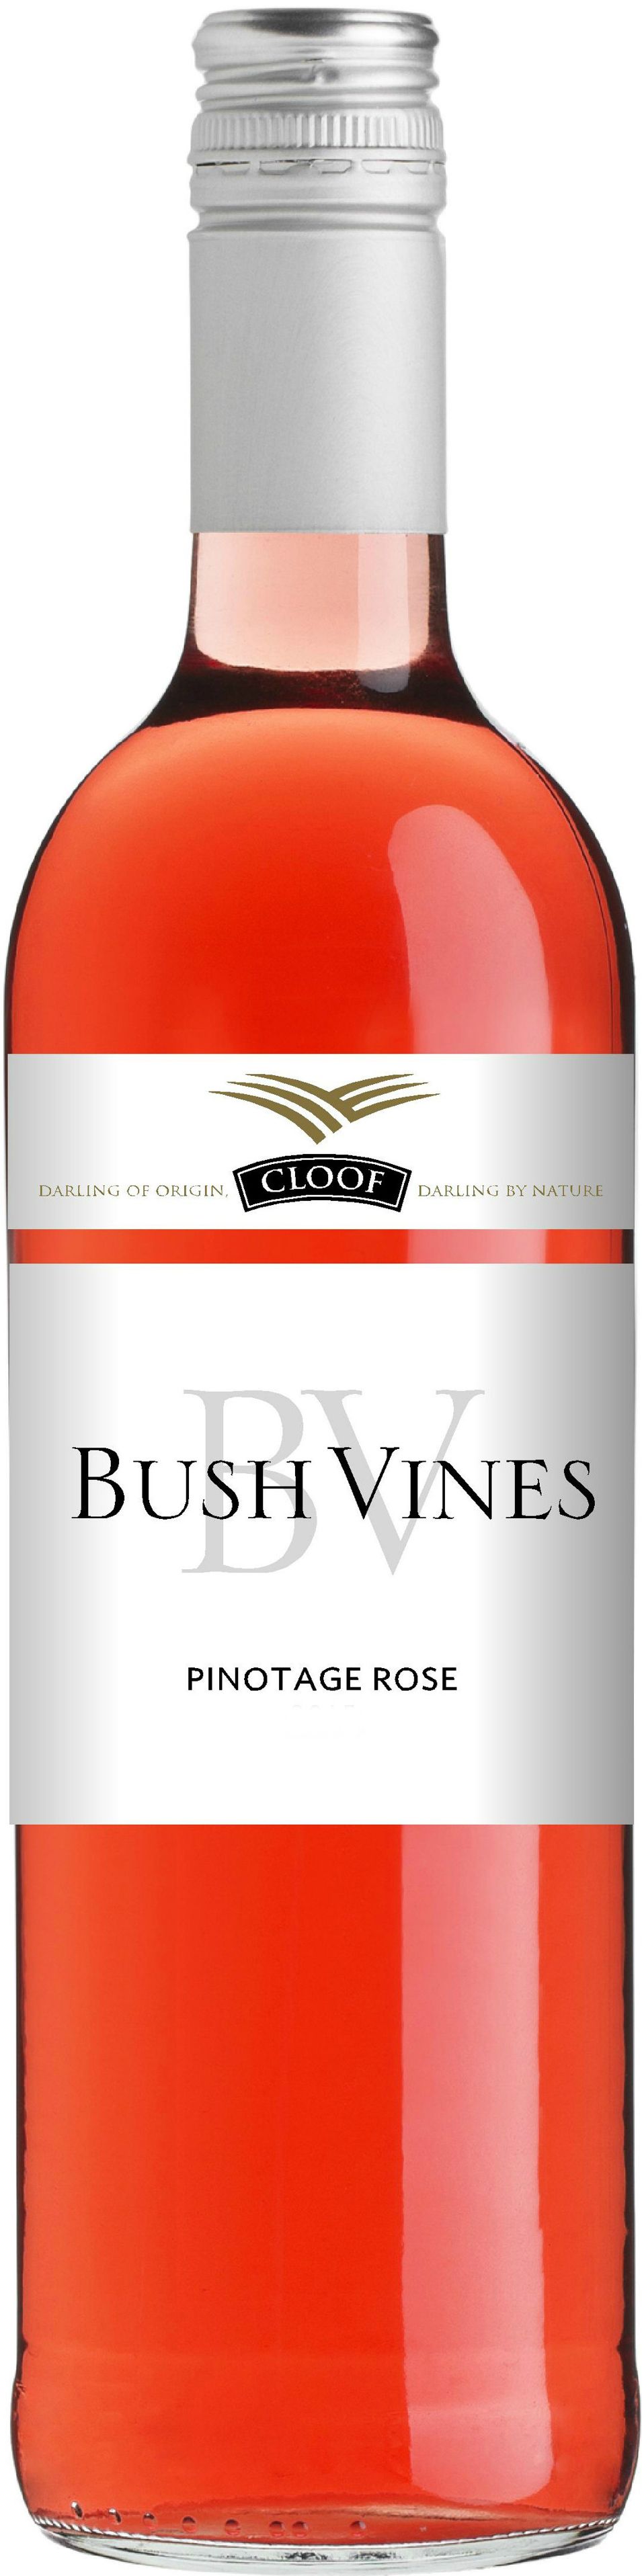 Cloof, Bush Vines Pinotage Rose, 2019